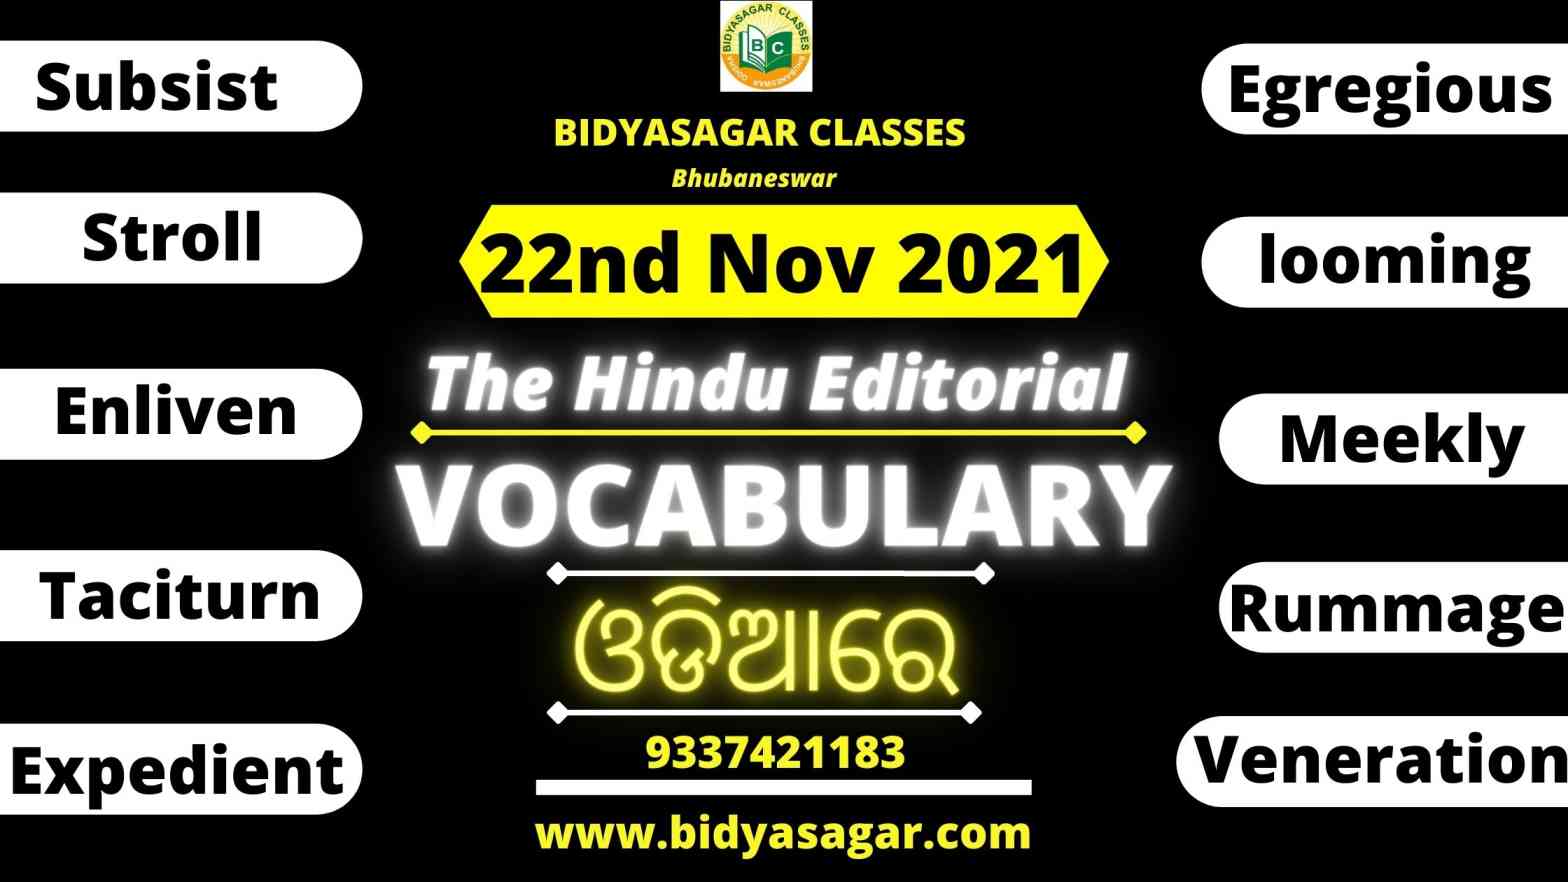 The Hindu Editorial Vocabulary of 22nd November 2021